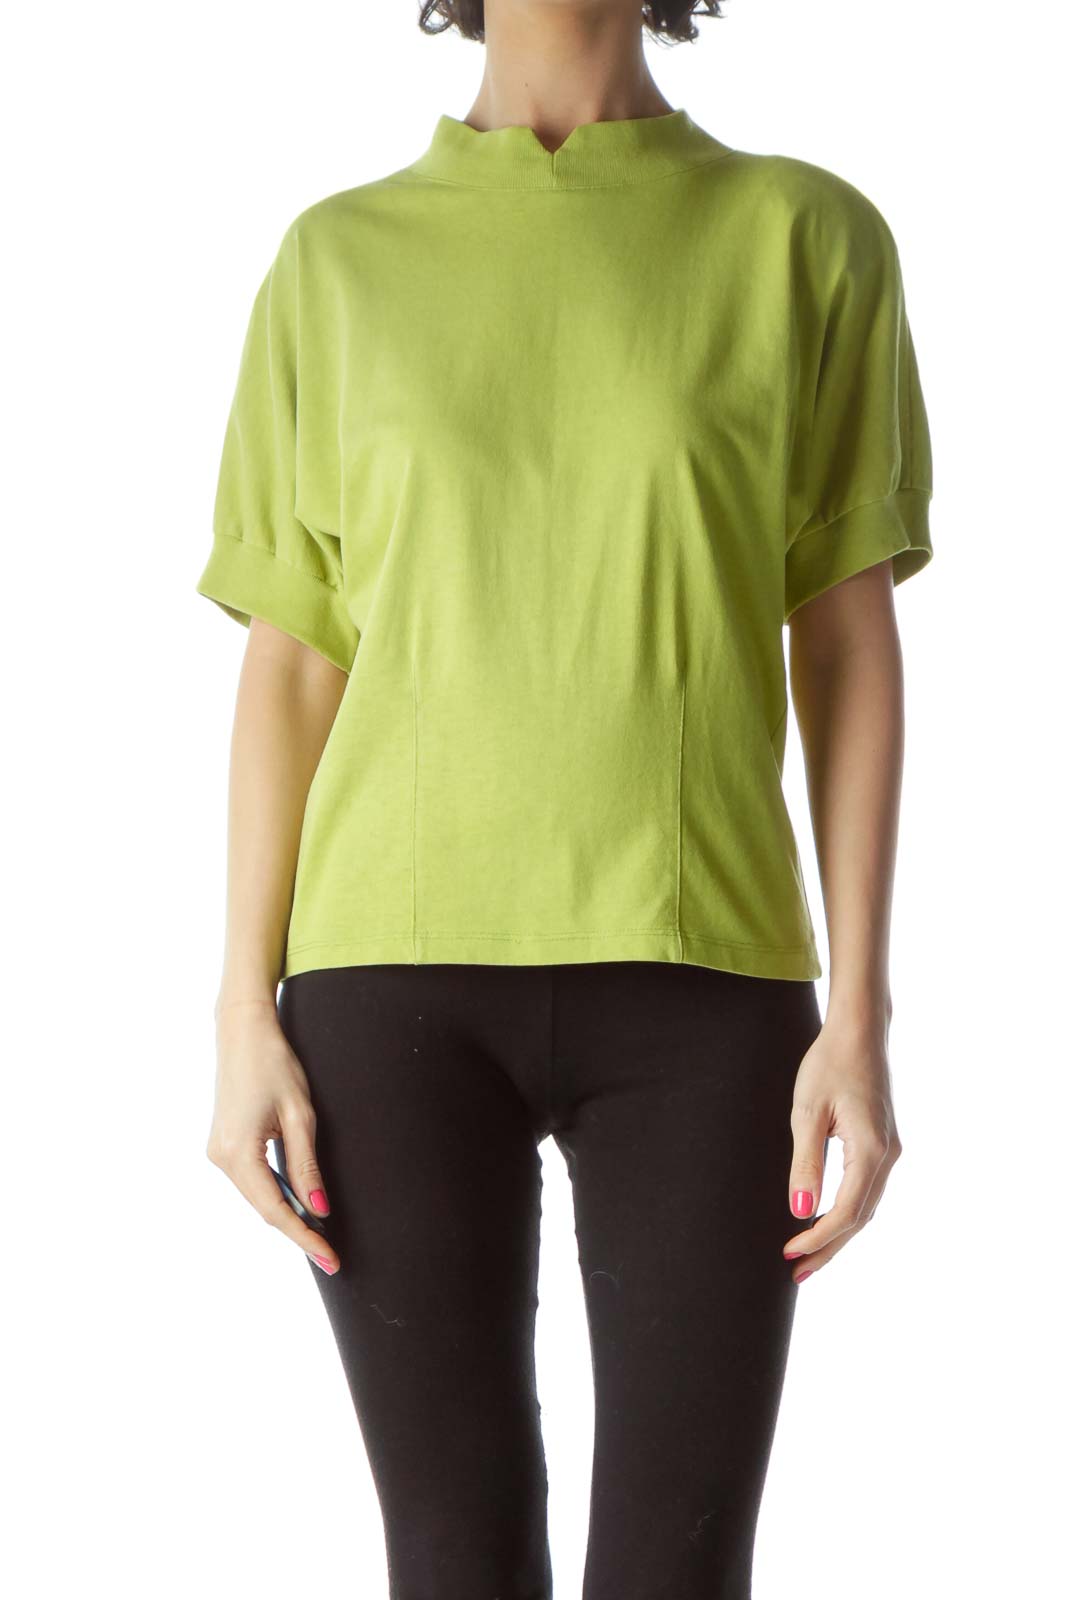 Green Raglan Sleeve Knit Top Front